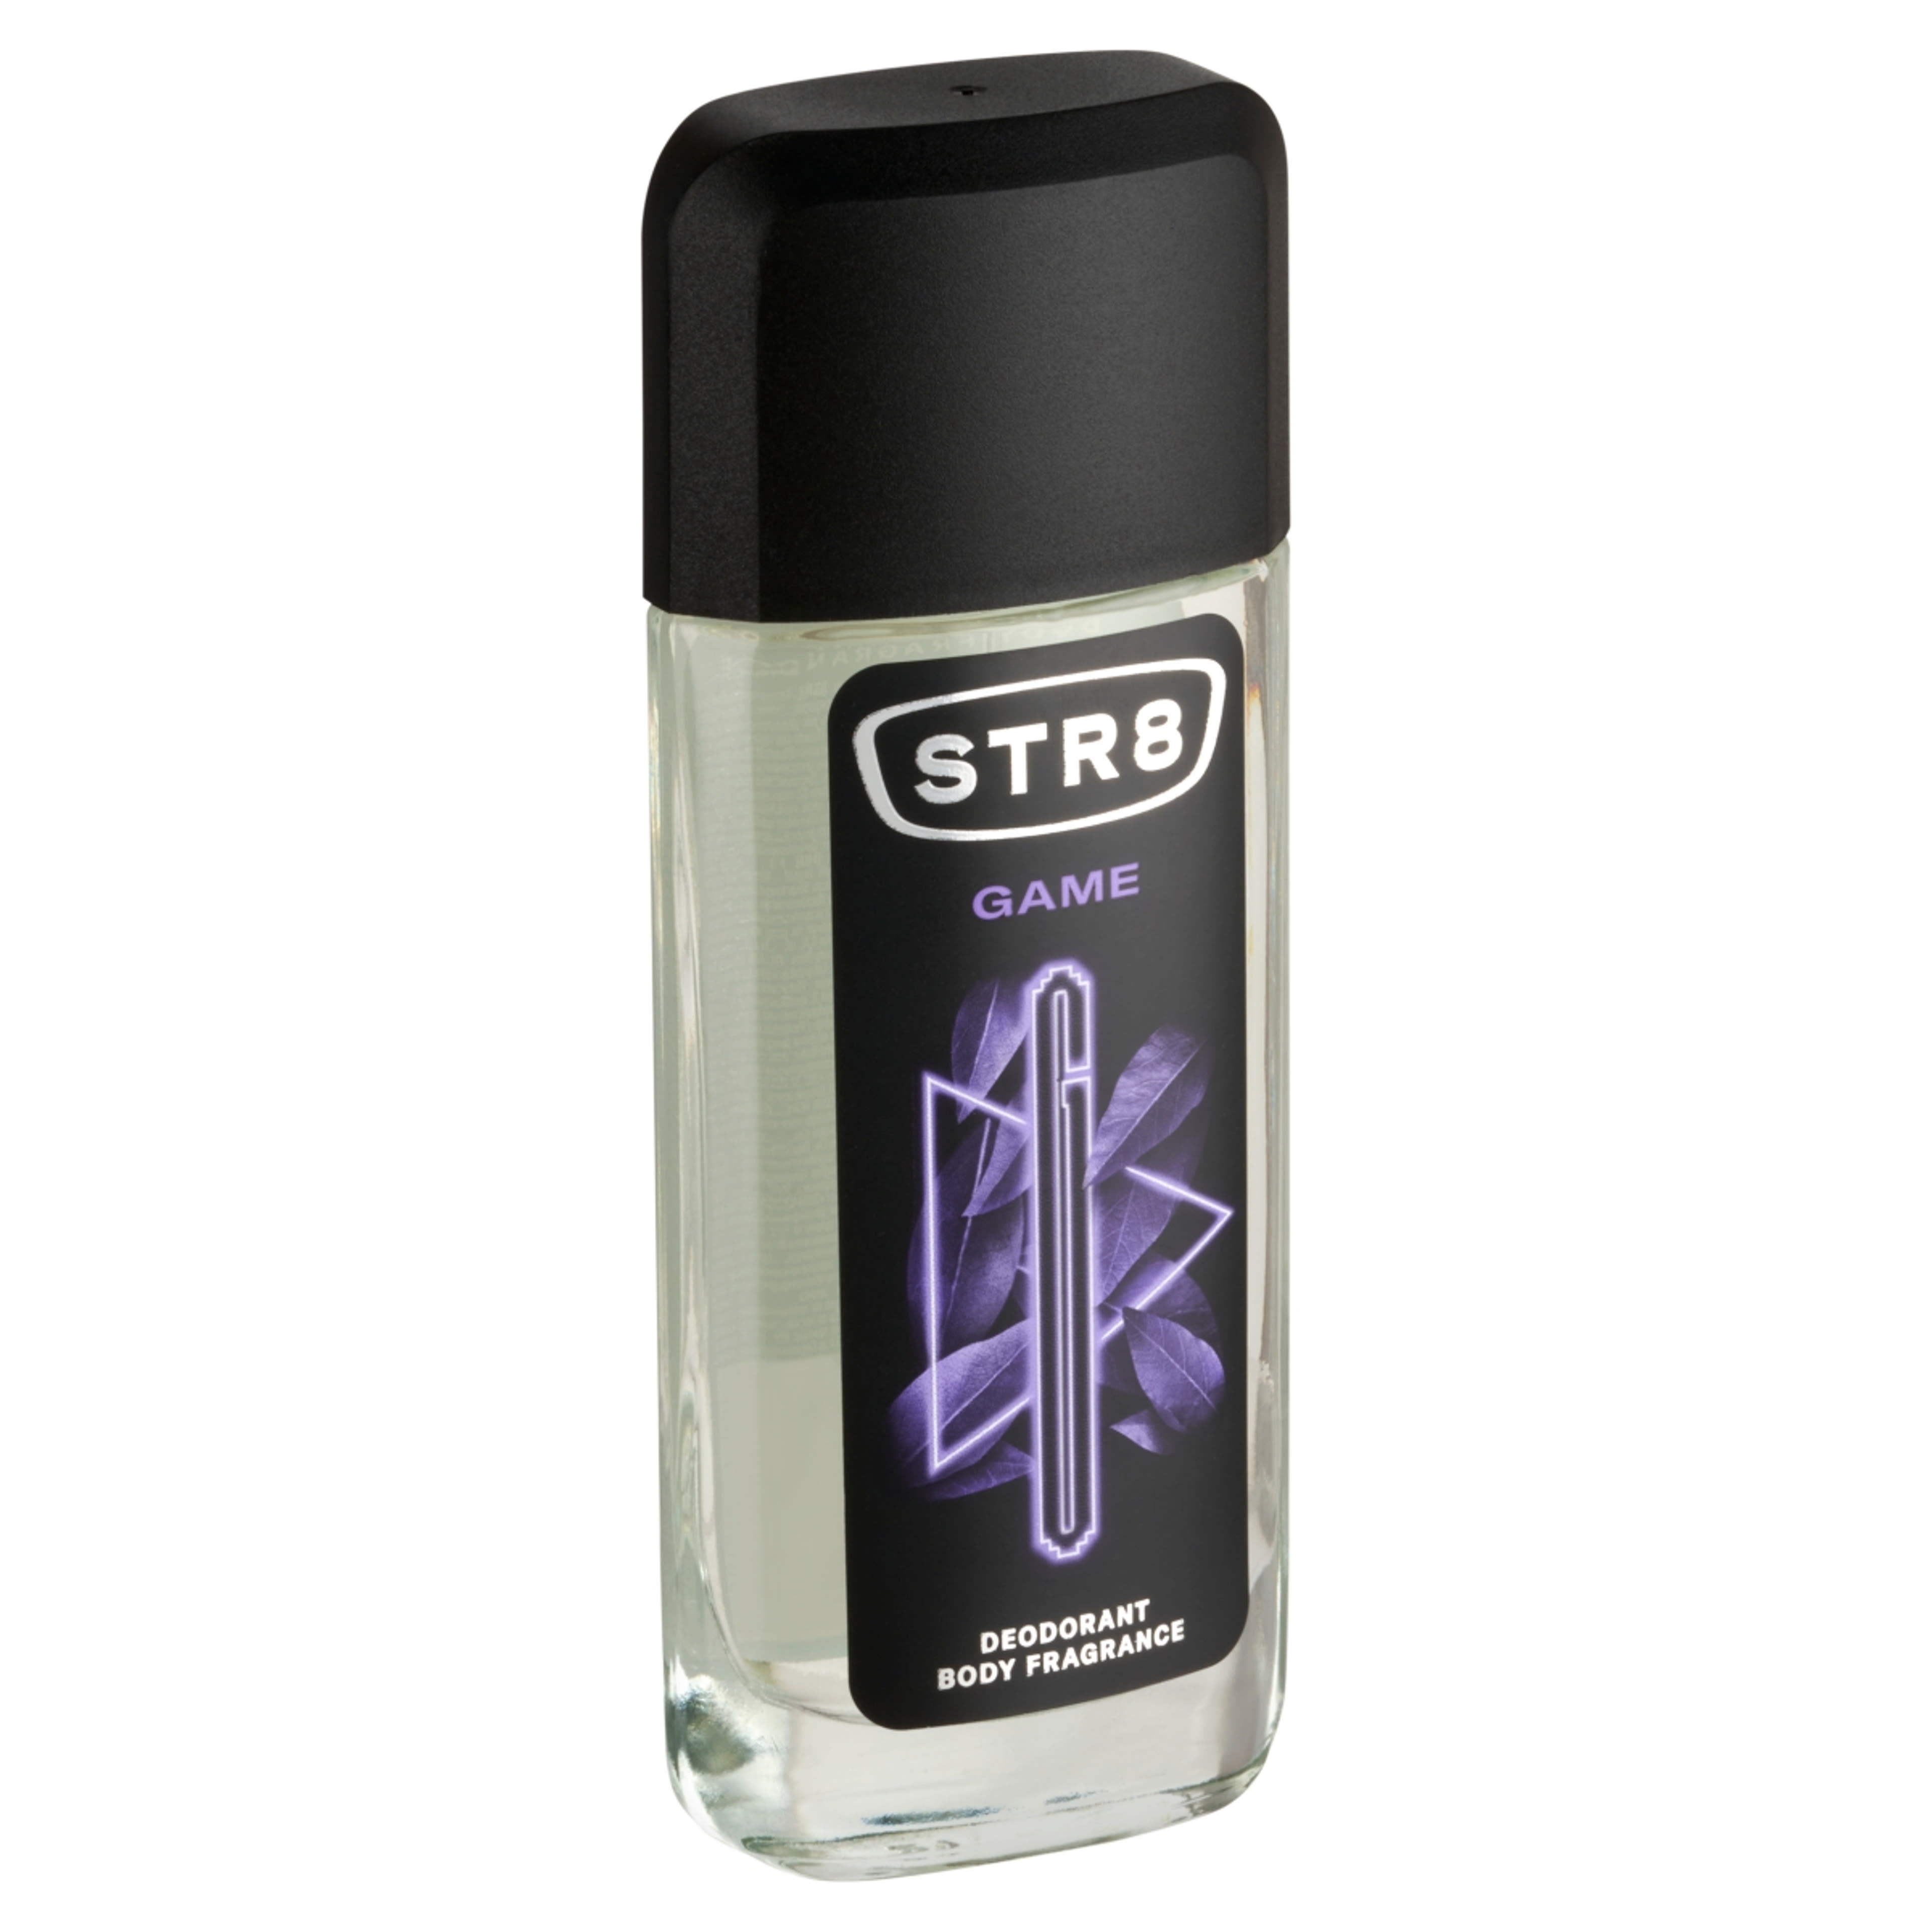 STR8 Game On Body Fragrance  parfüm-spray - 85 ml-3